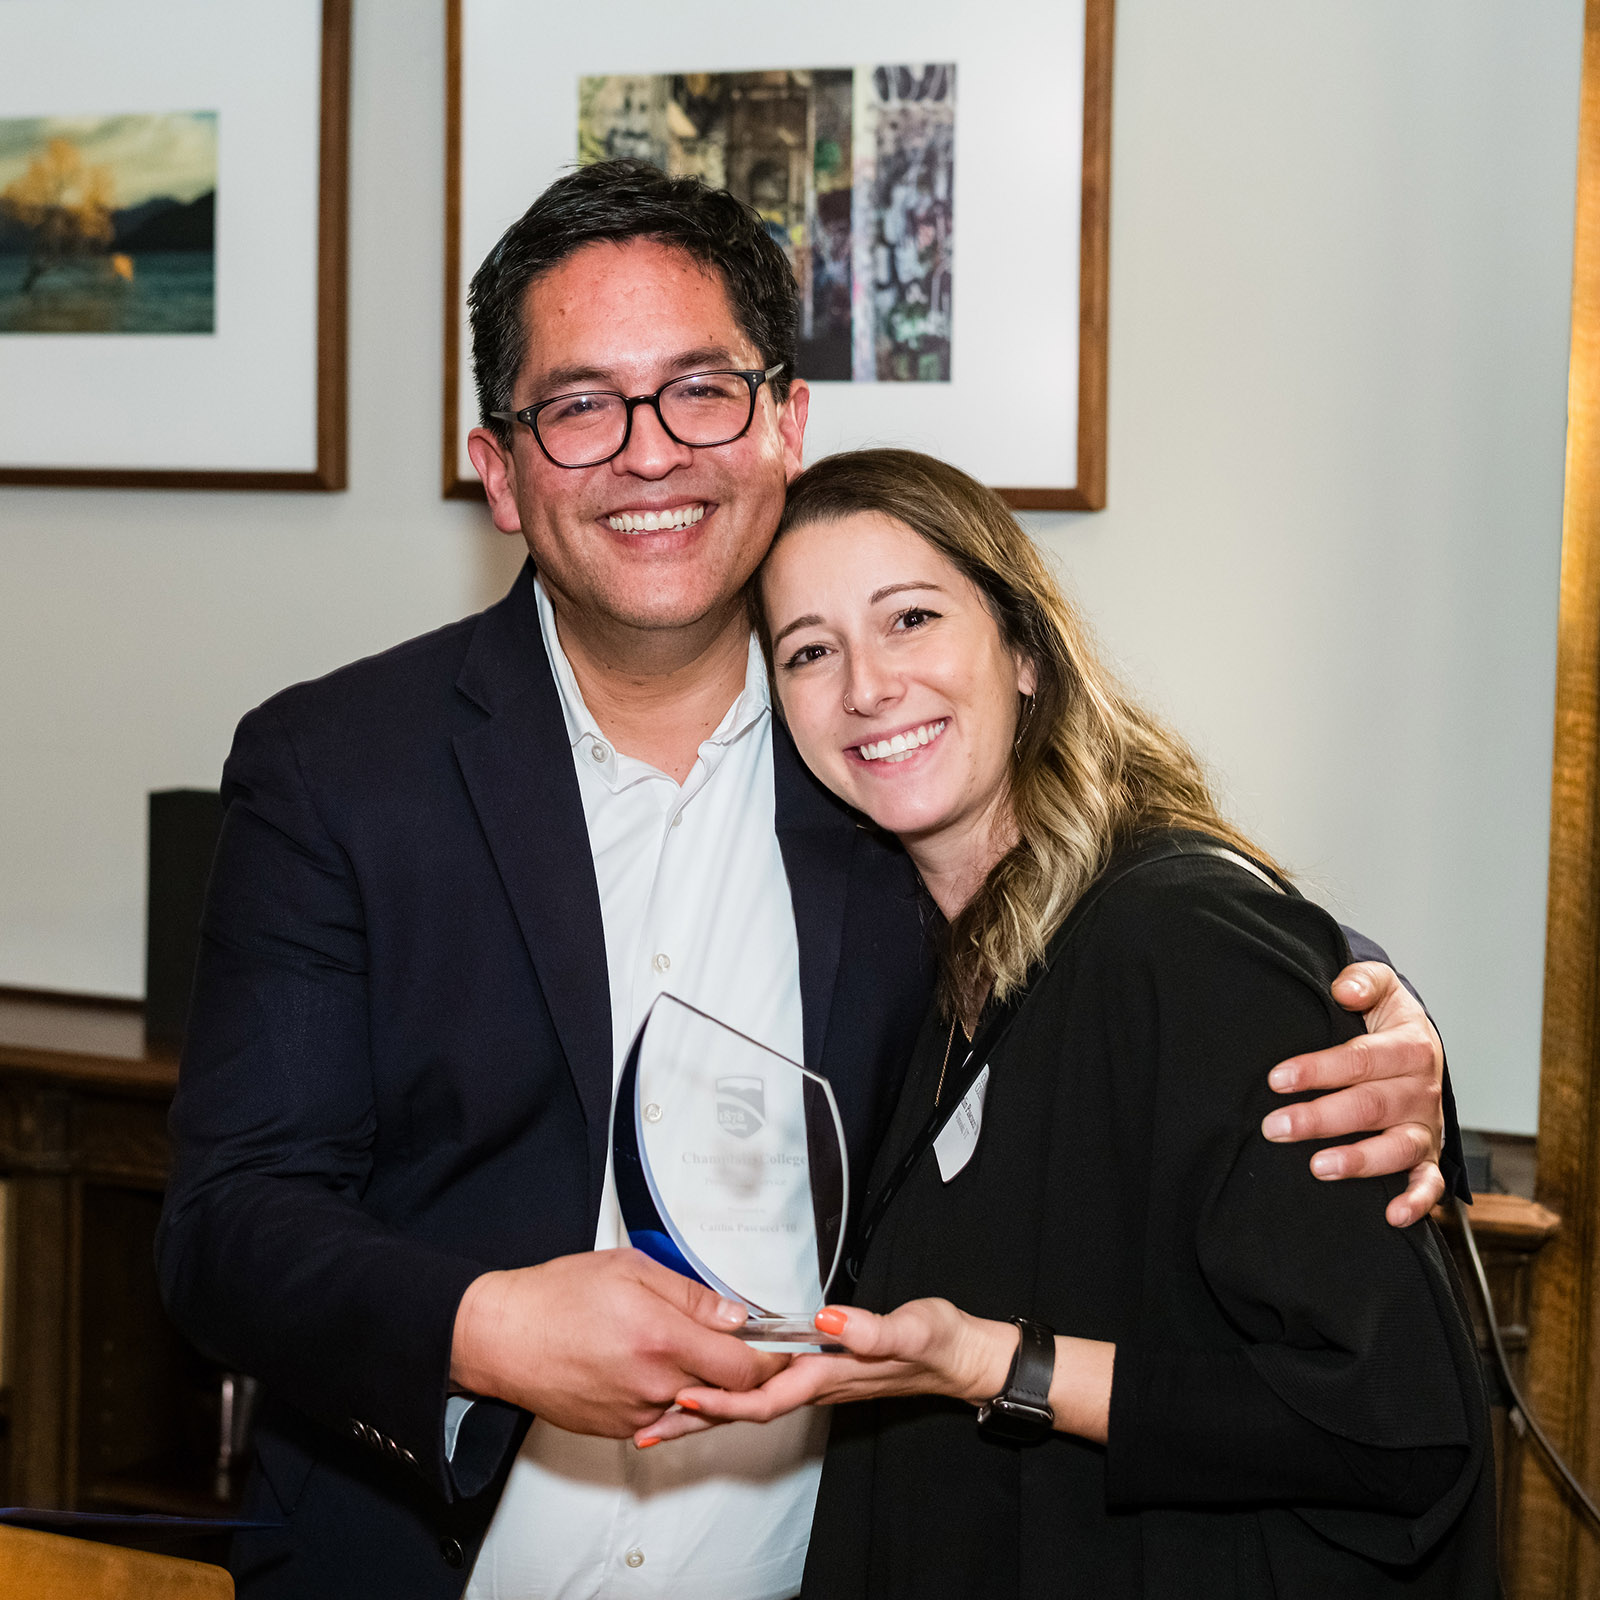 President Hernandez and Caitlin Pascucci alumni award